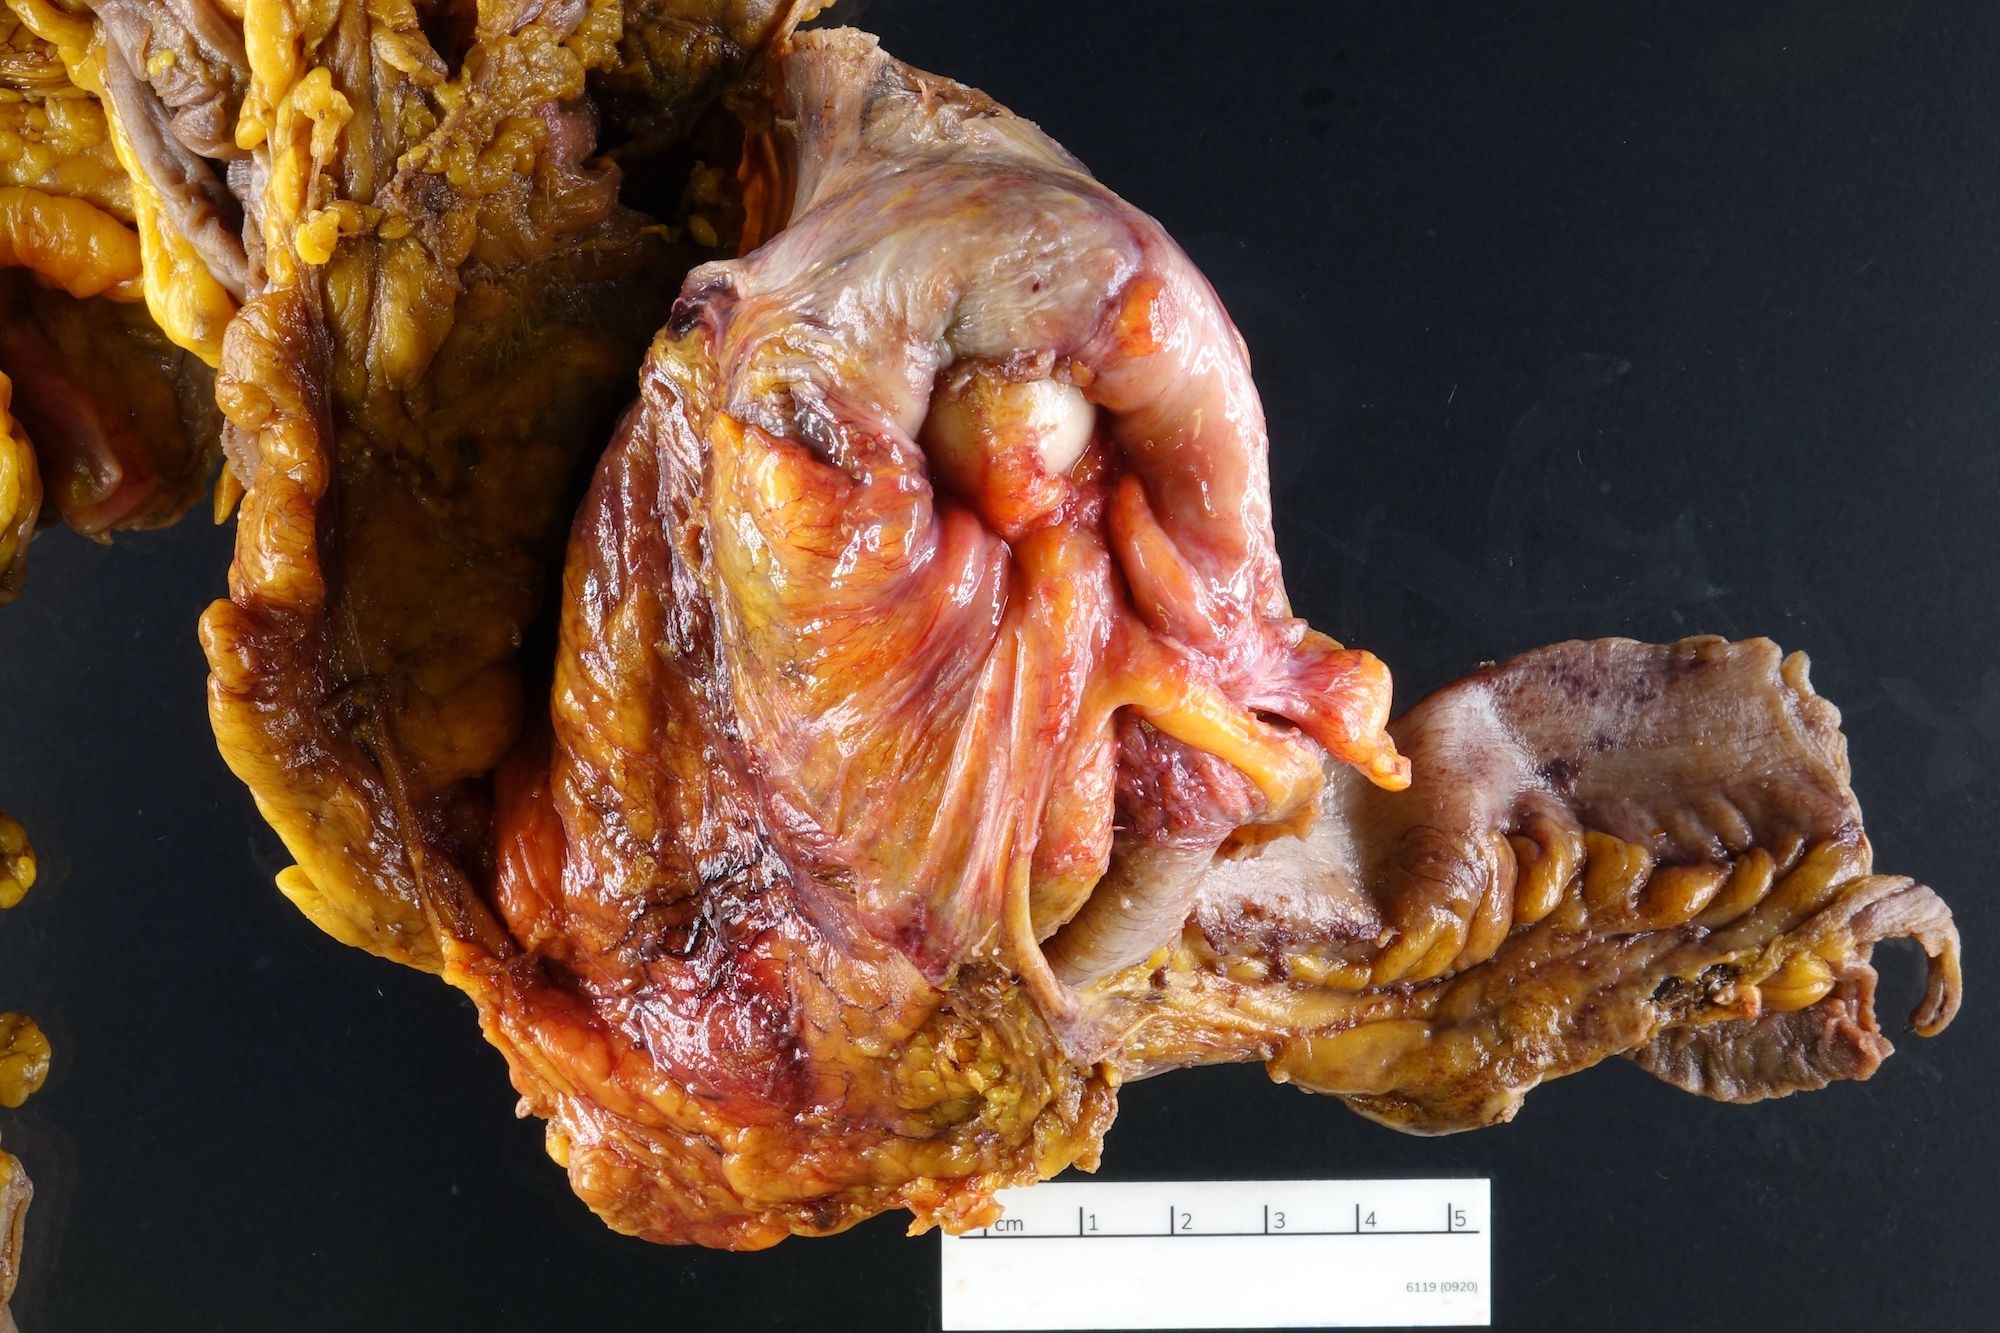 Serosal surface of inverted appendix